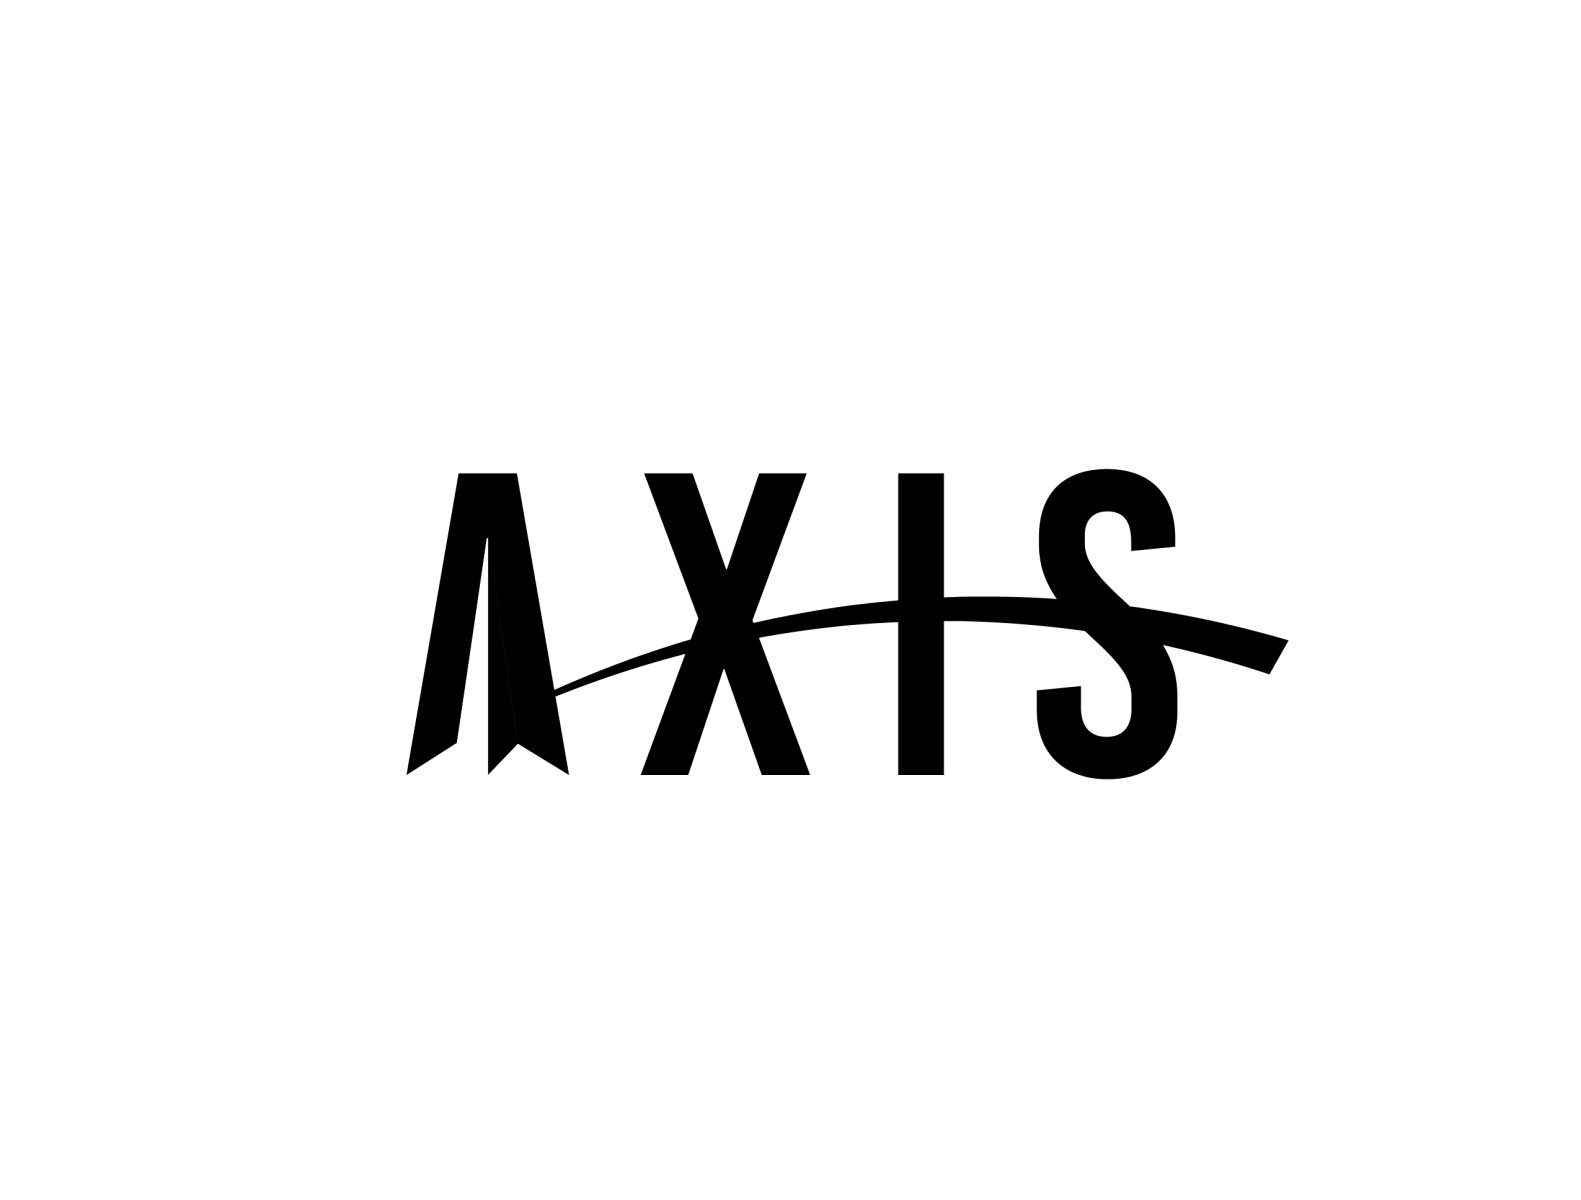 Axis Logo by Skye Sagisi on Dribbble